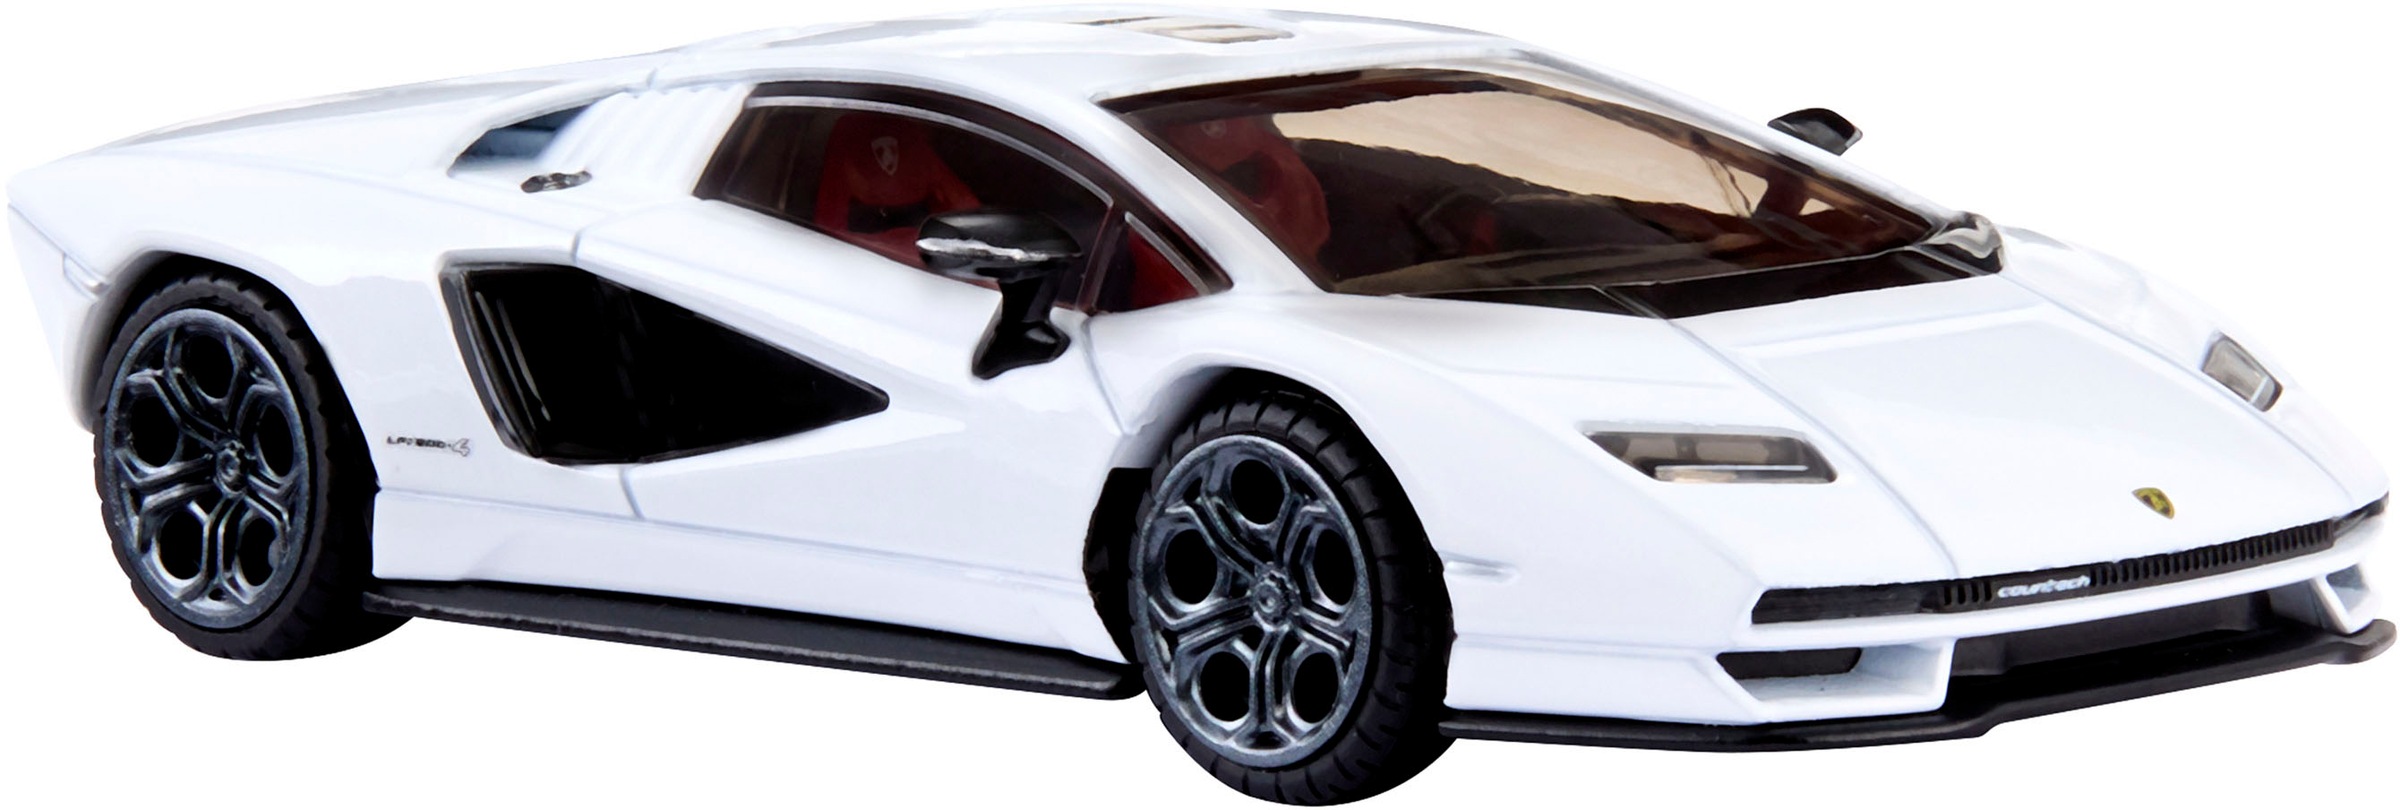 »Premium Lamborghini bei 1:43« Spielzeug-Auto Hot Wheels